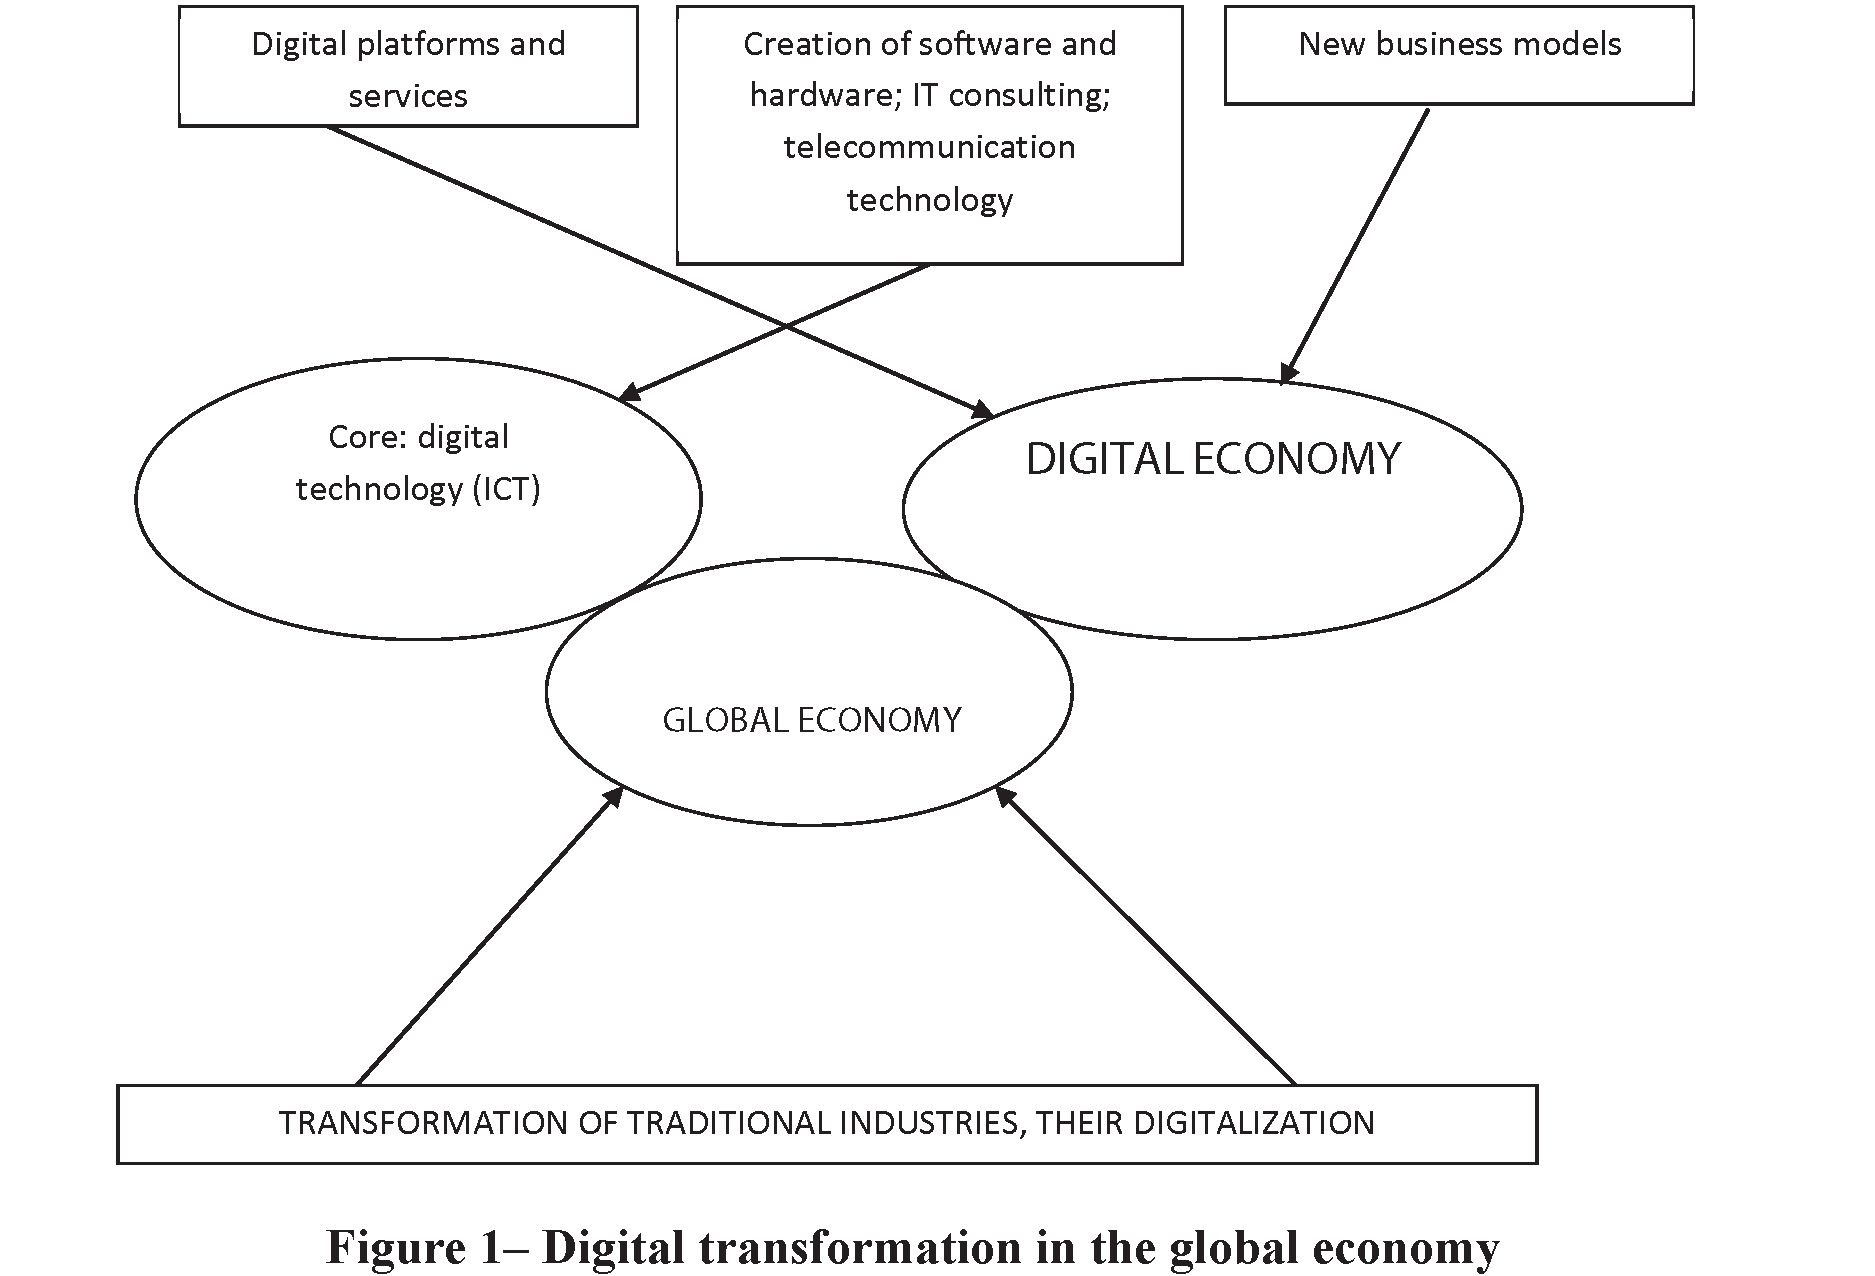 Digital transformation of the global economy